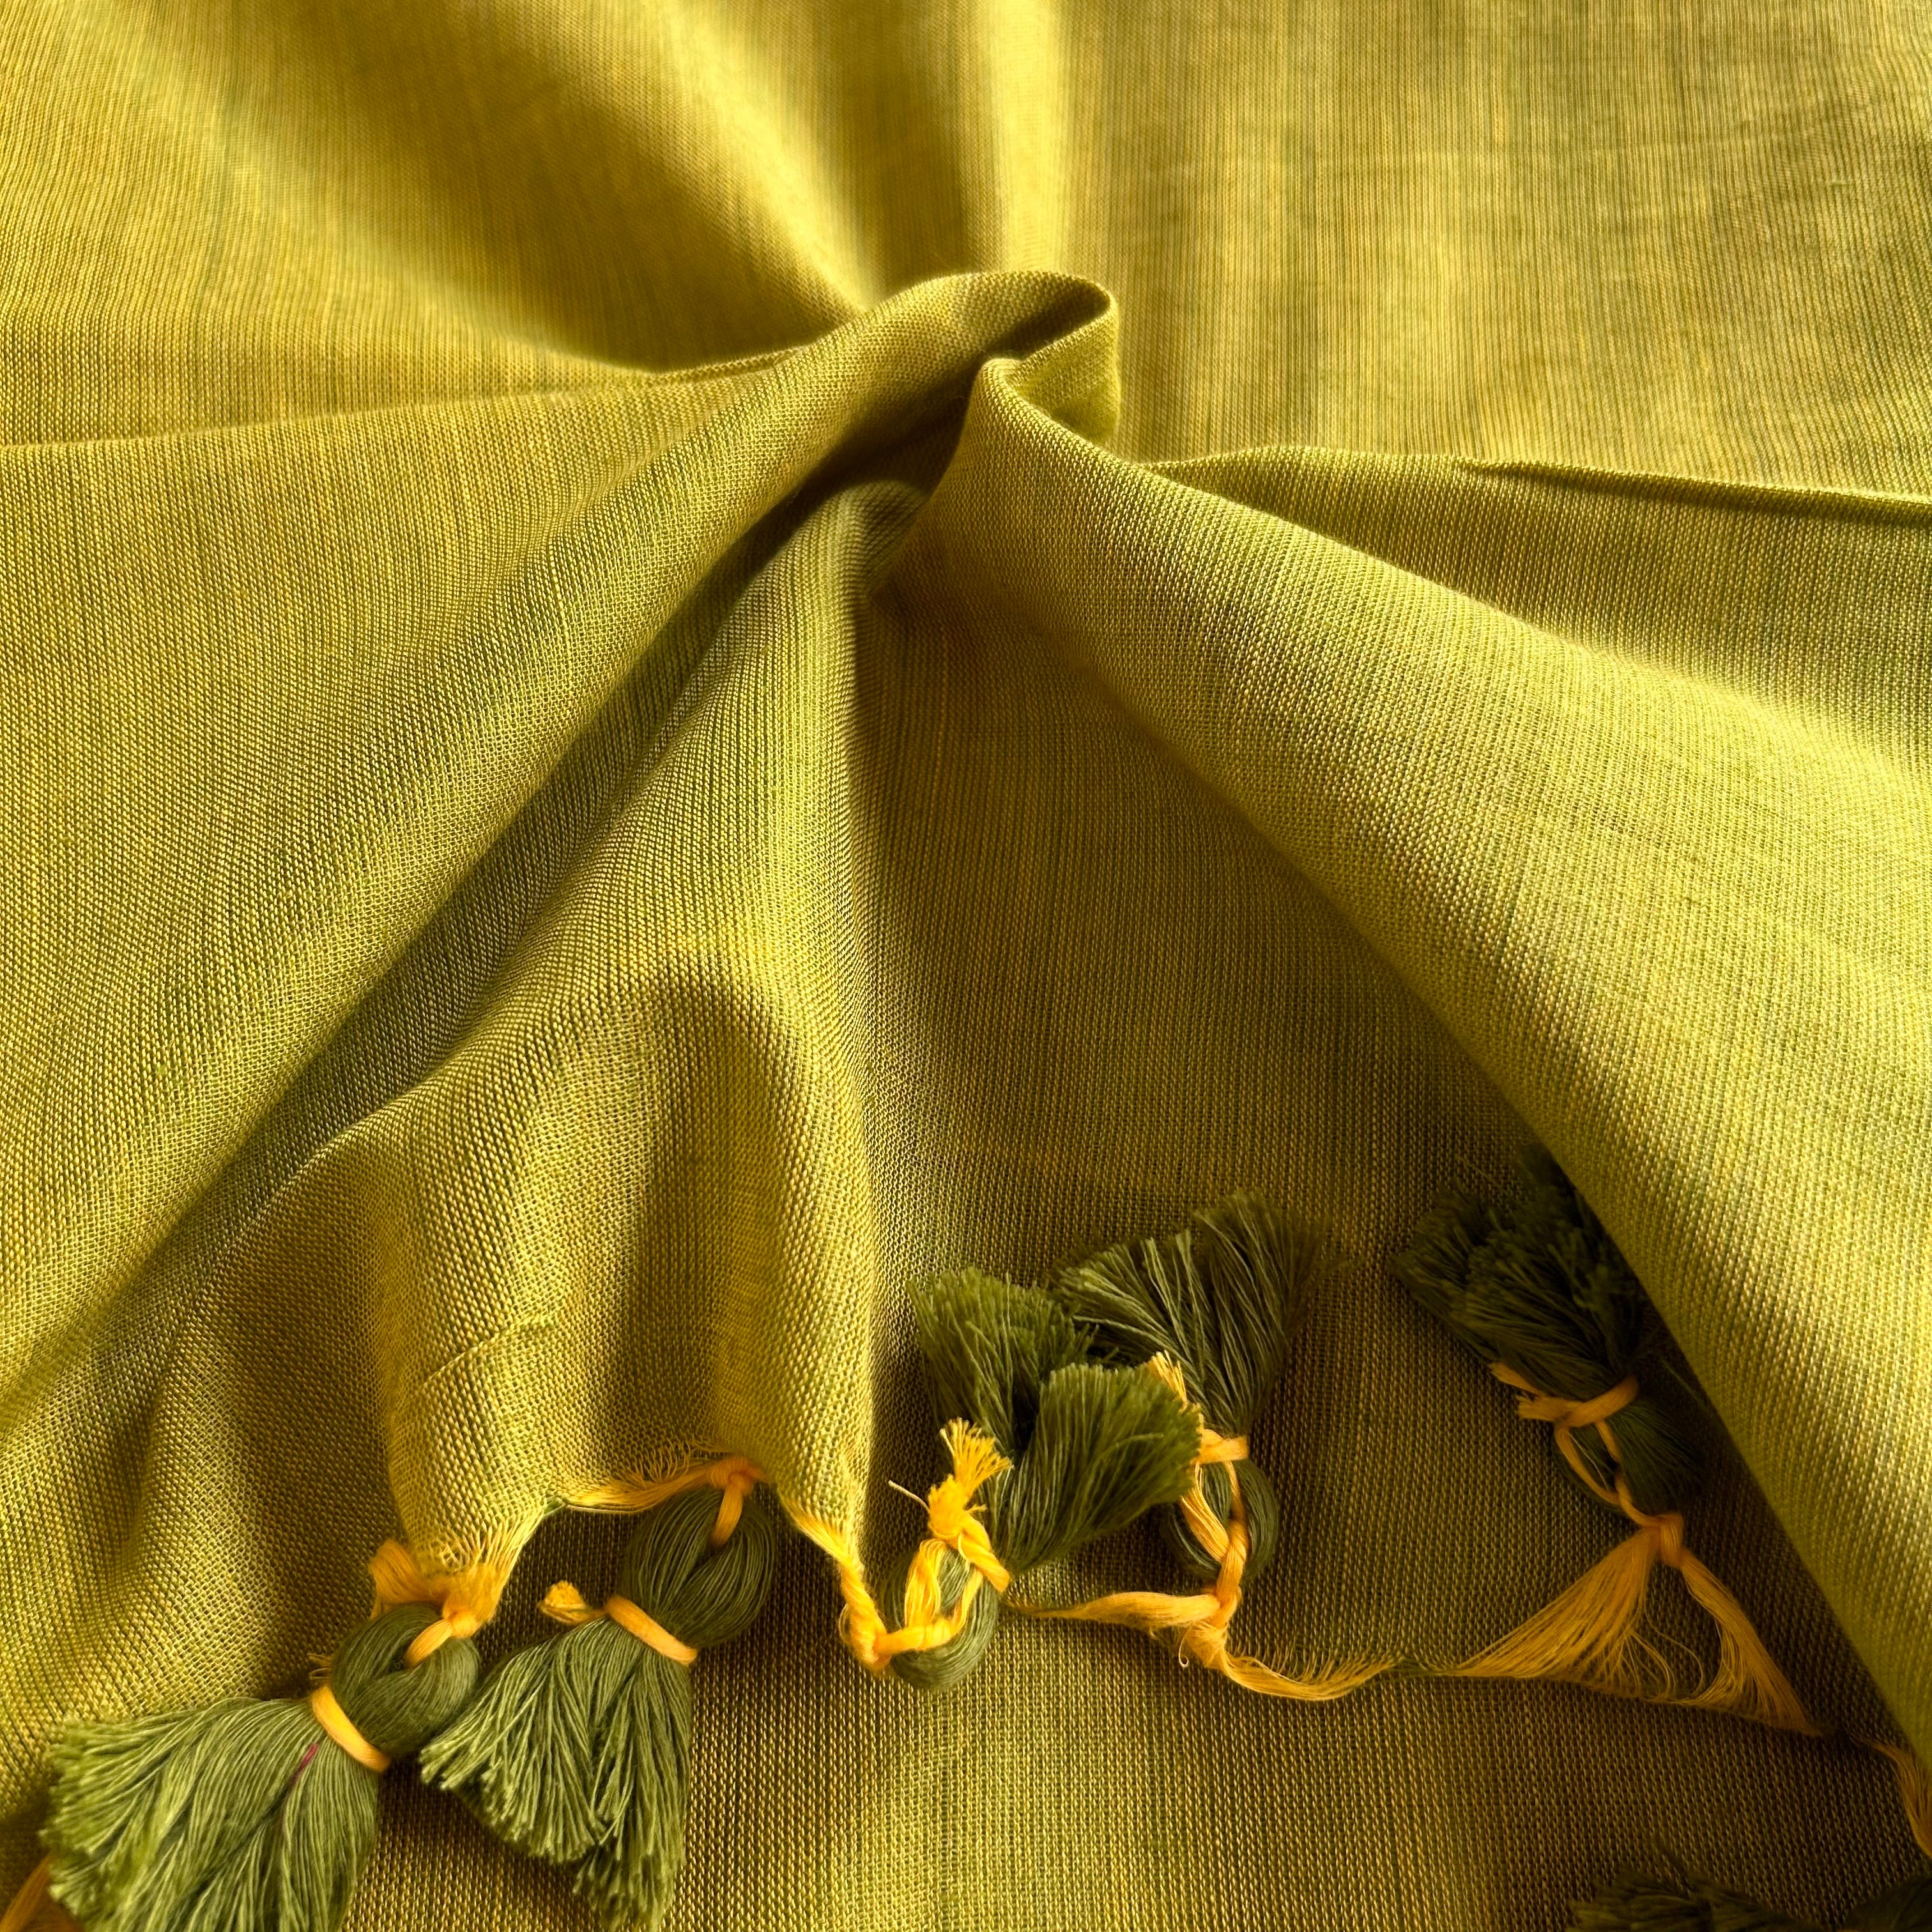 Sutisancha Lime Green Handloom Cotton Saree With Blouse